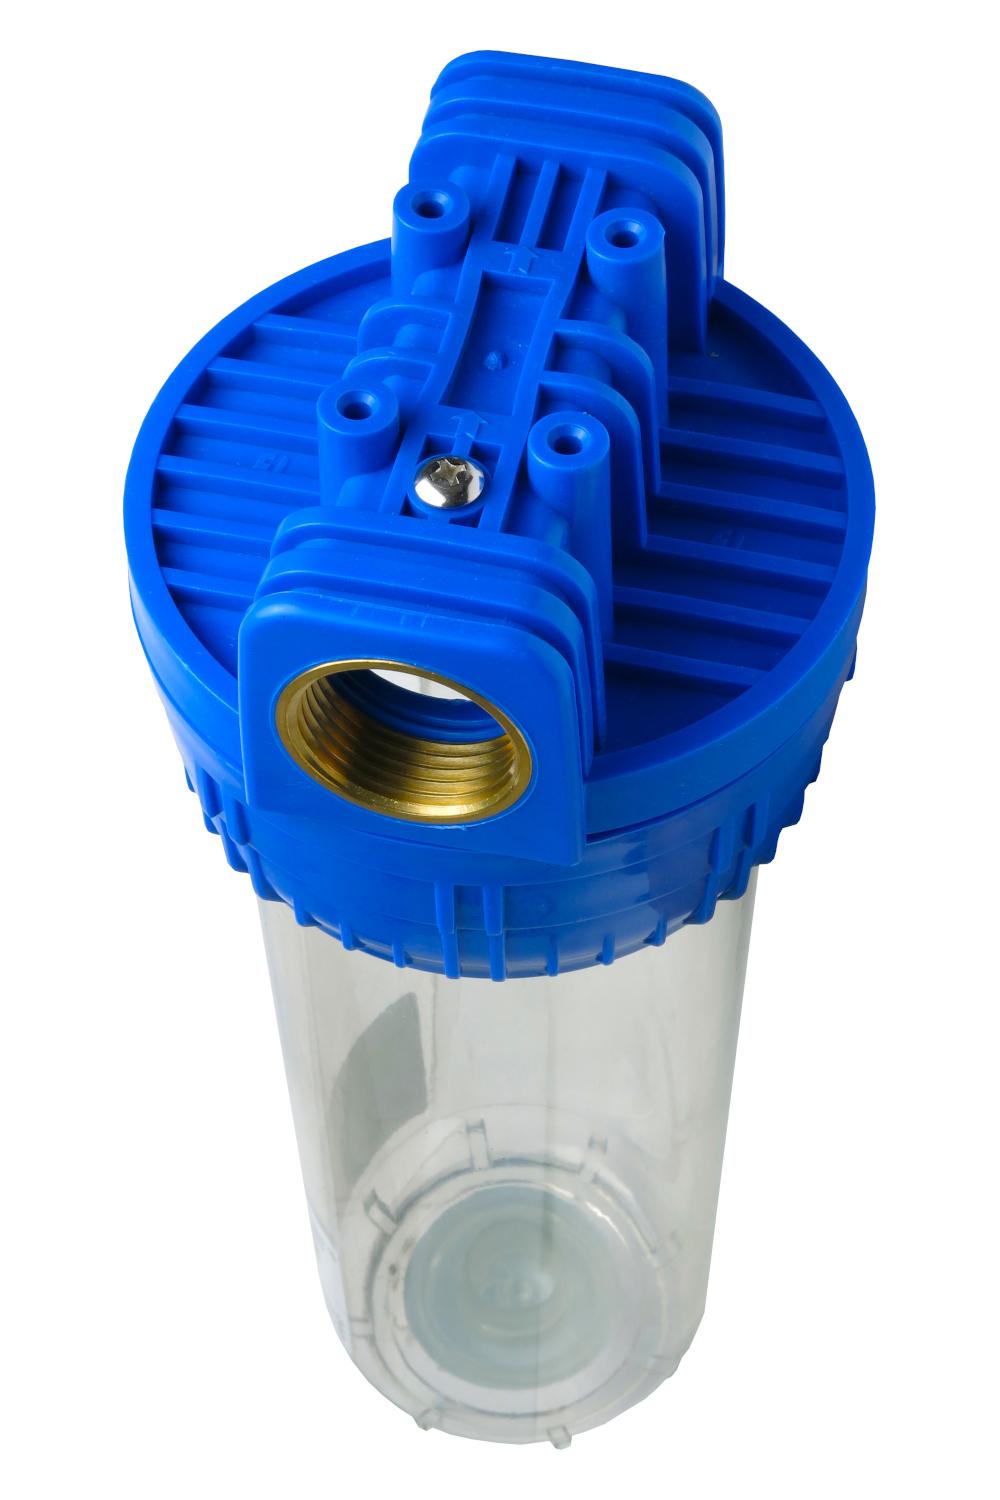 TWaLa Wasserfilter Gehäuse 1/2" Messing Anschluss transparent blau für 10" Filterpatronen